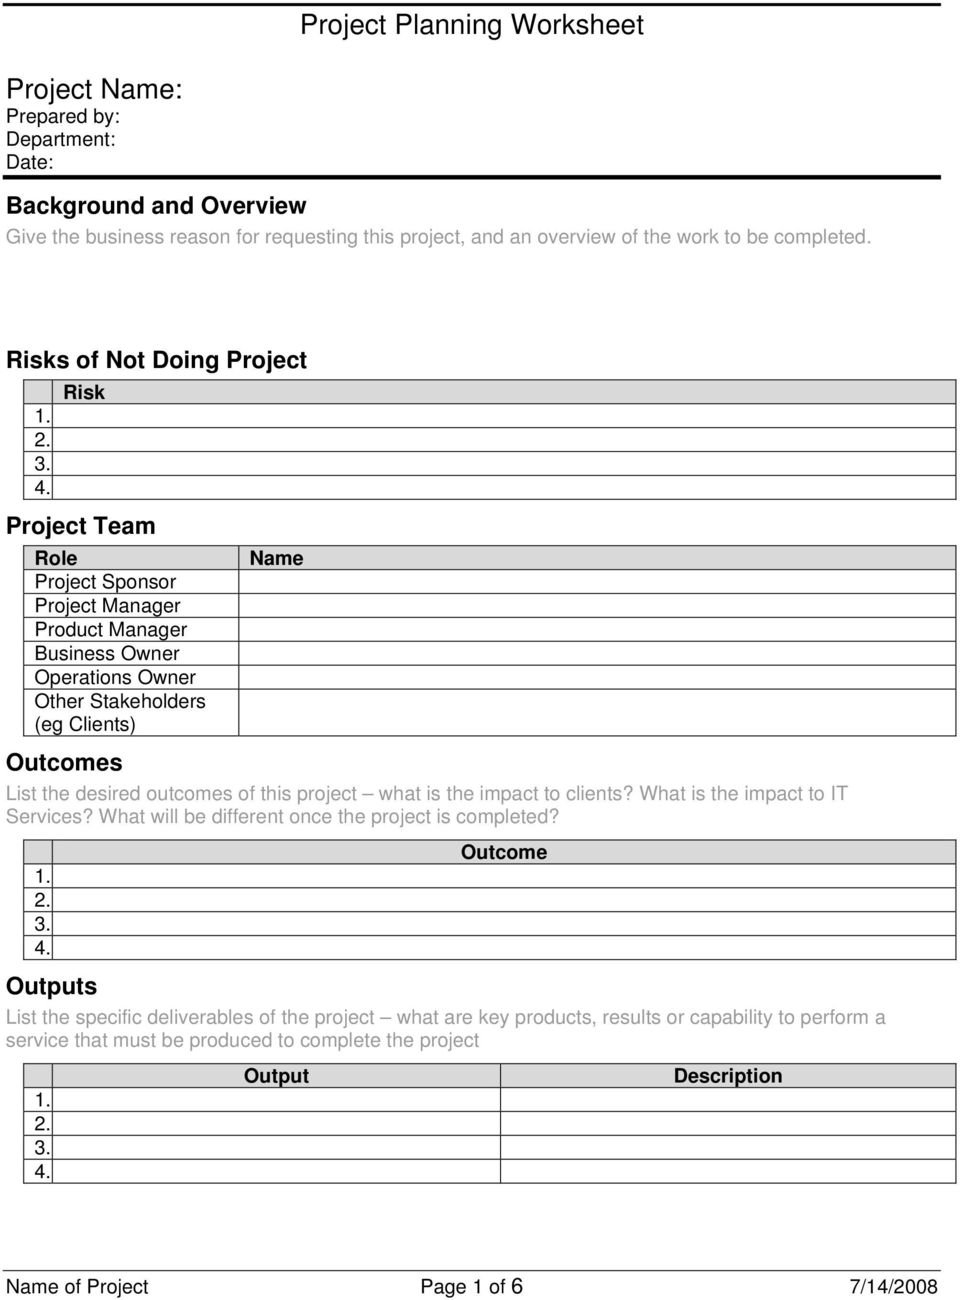 Project Planning Worksheet — excelguider.com